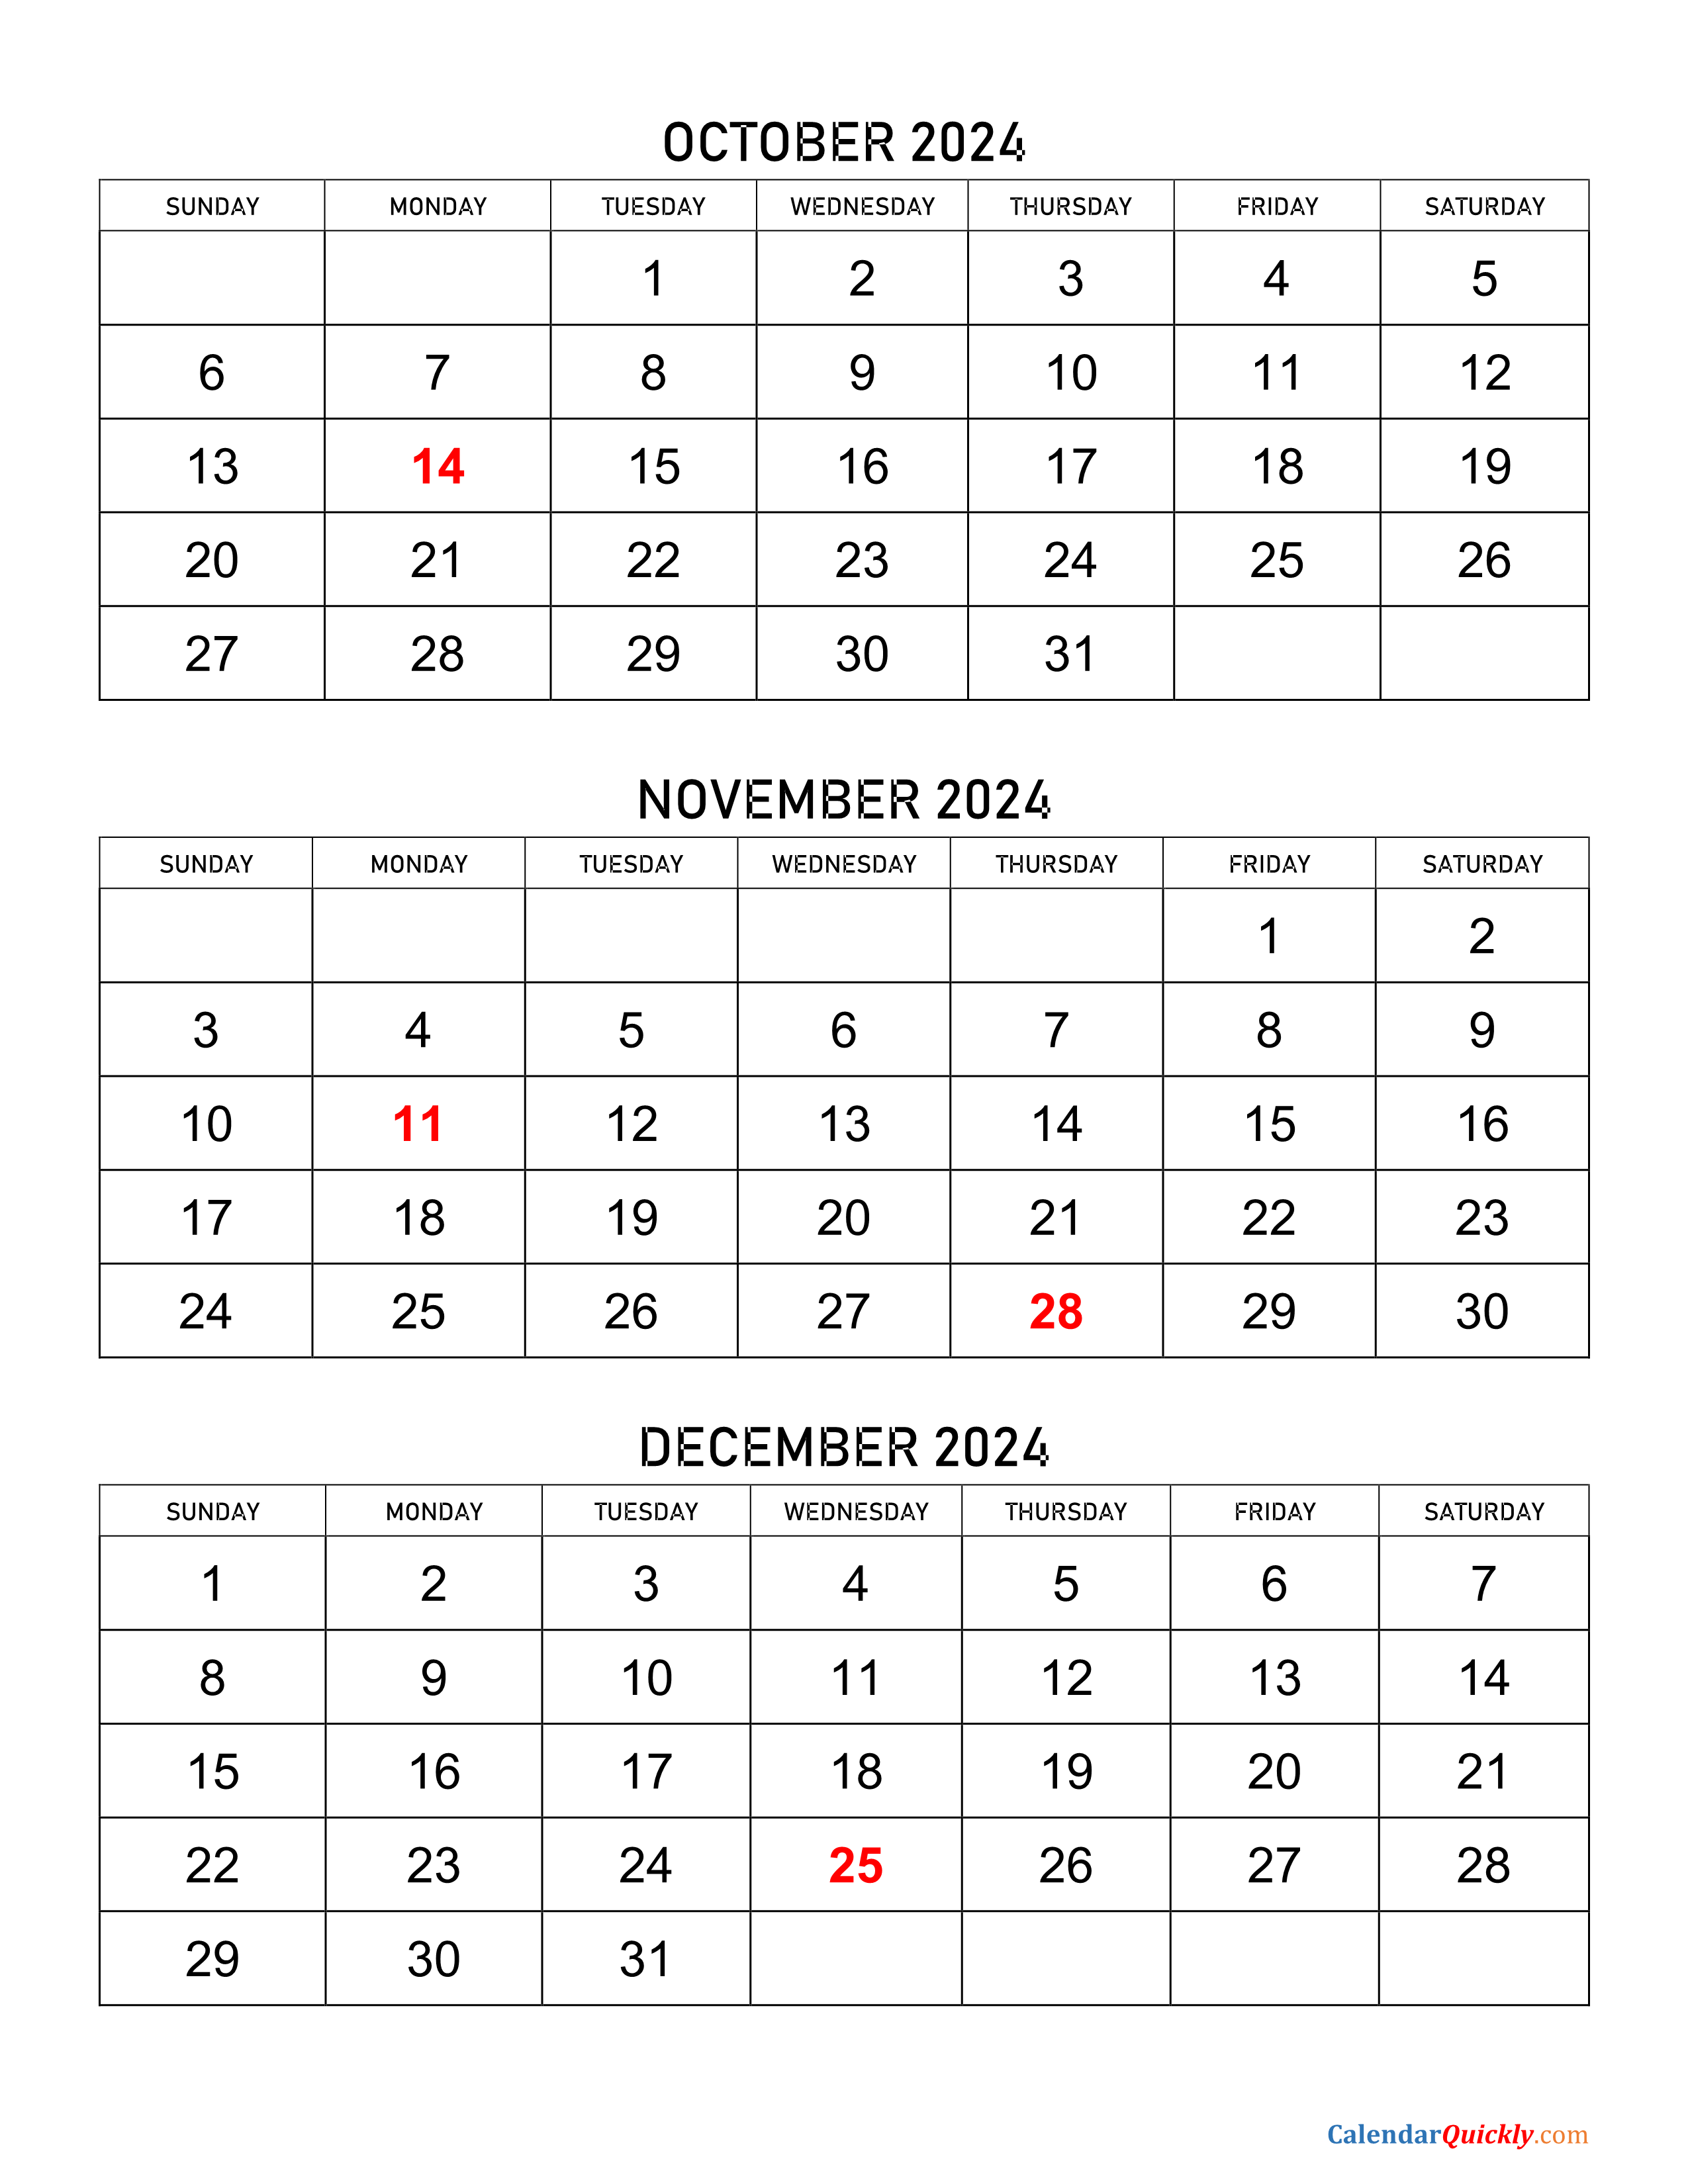 2024 October November December Calendar Printable 2024 CALENDAR PRINTABLE - Free Printable 2024 Calendar October November December 2024